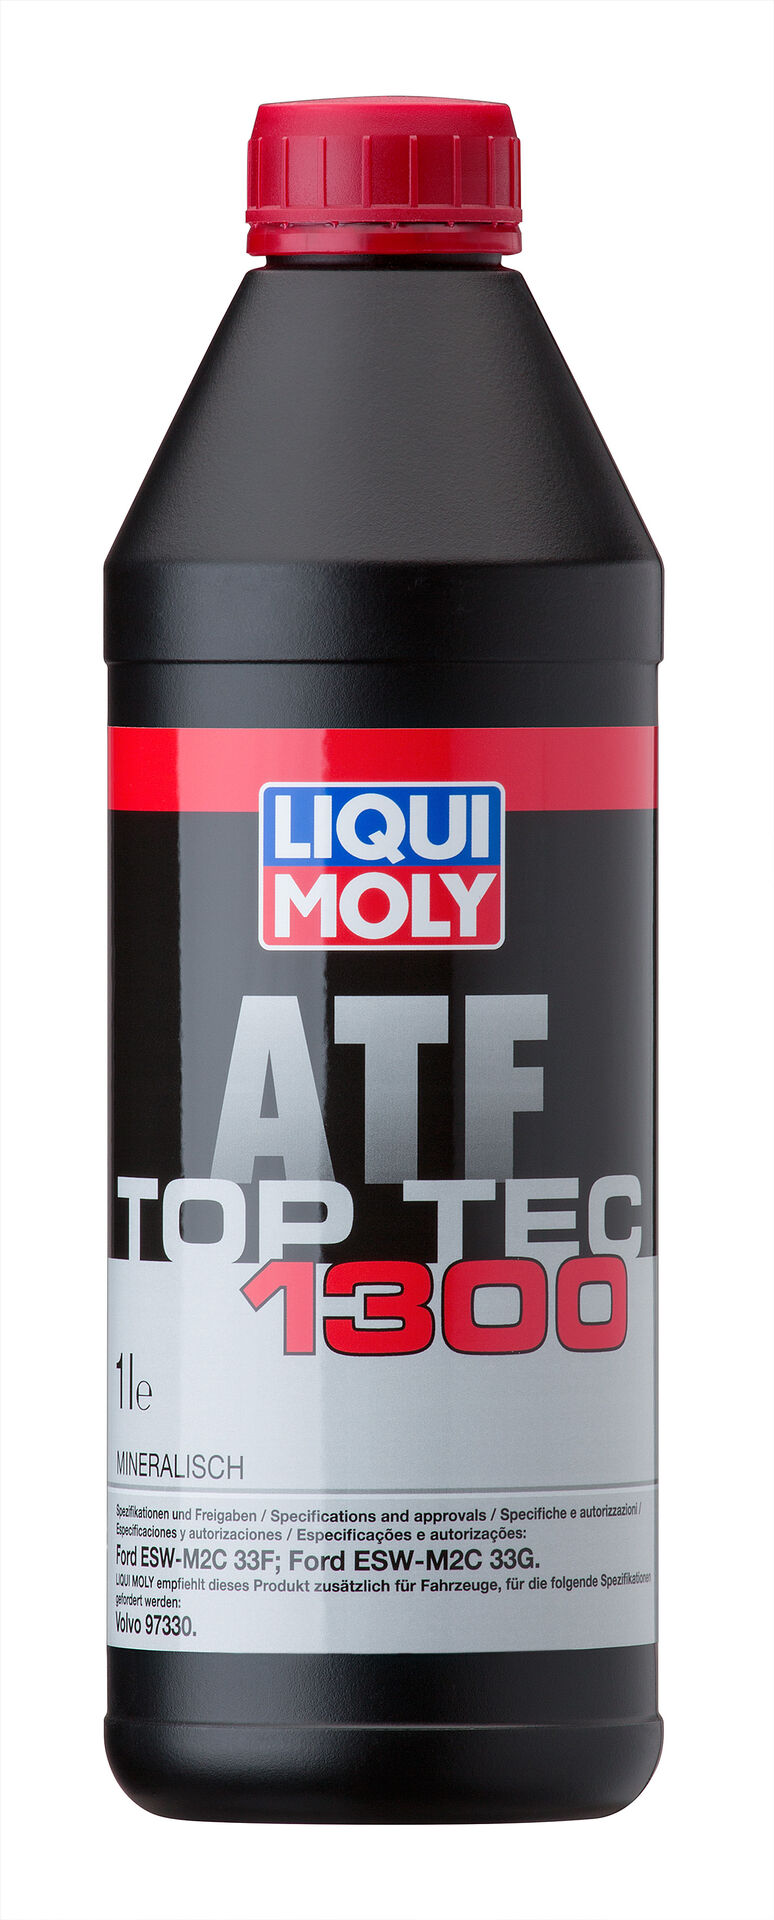 LIQUI MOLY Getriebeöl für Ford Taunus 17M Turnier 35F 1.7 1.5 36F 1.8 GBTS